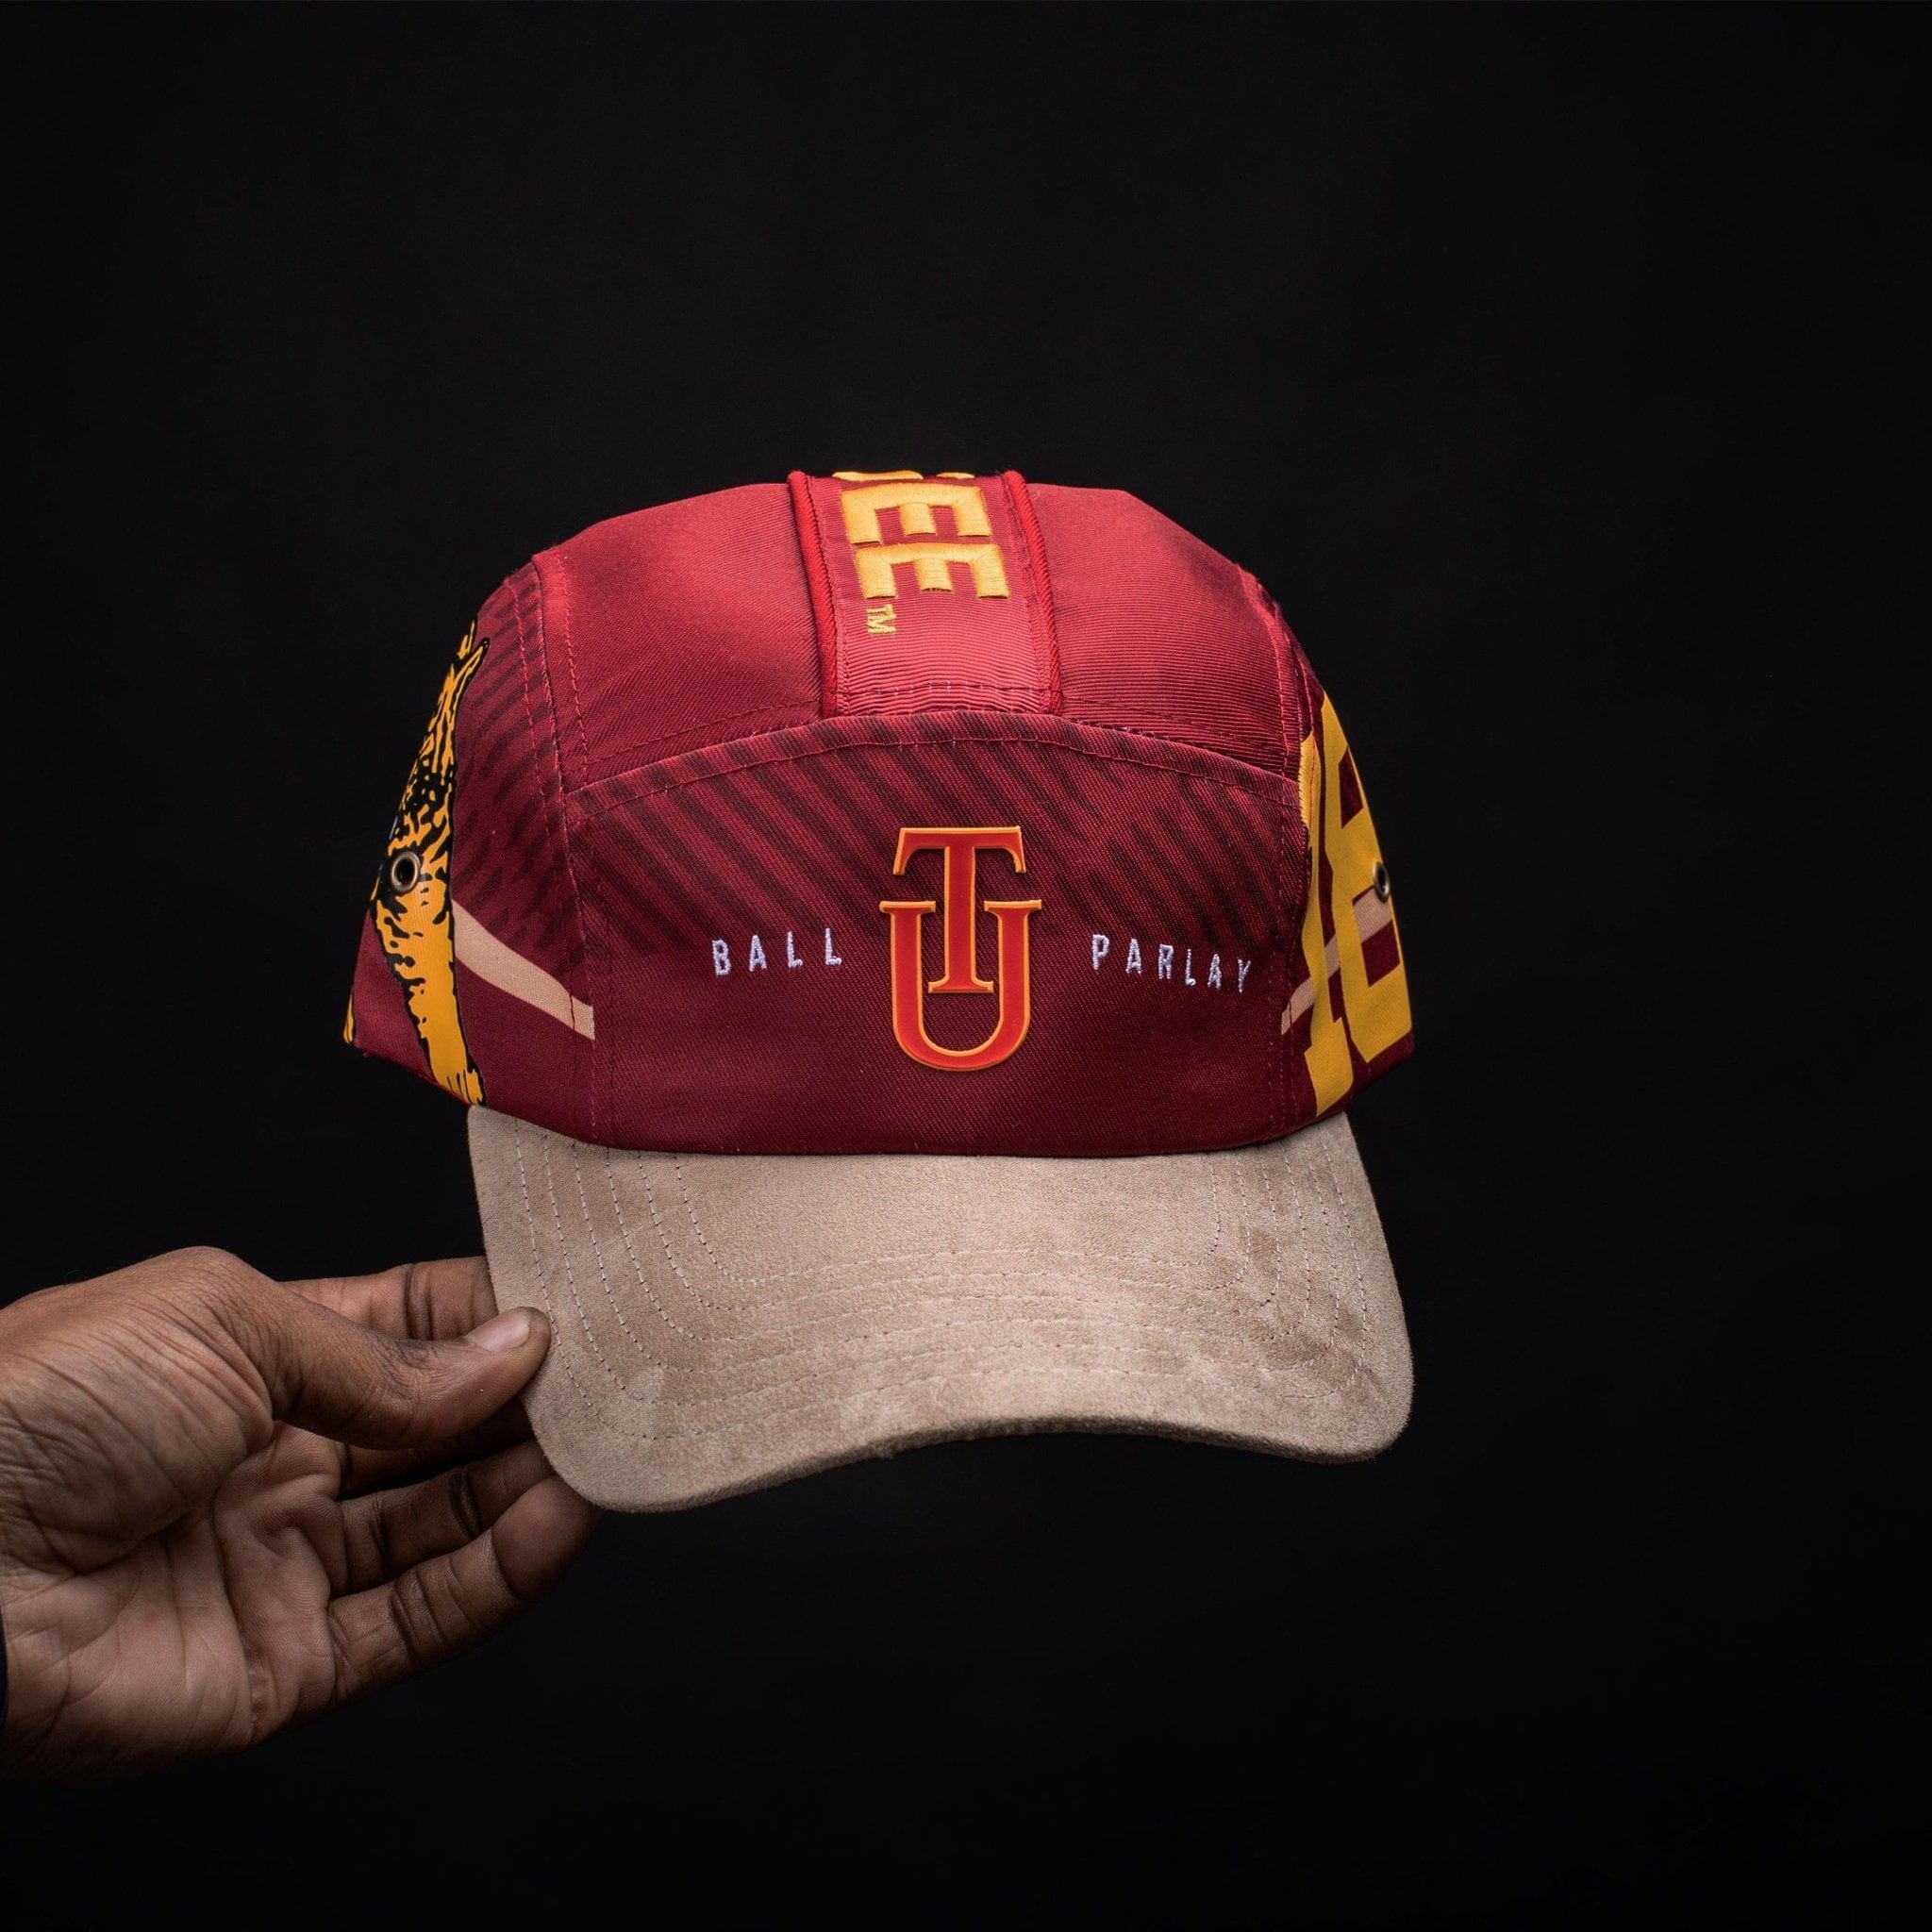 TheYard - Tuskegee University - HBCU Hat